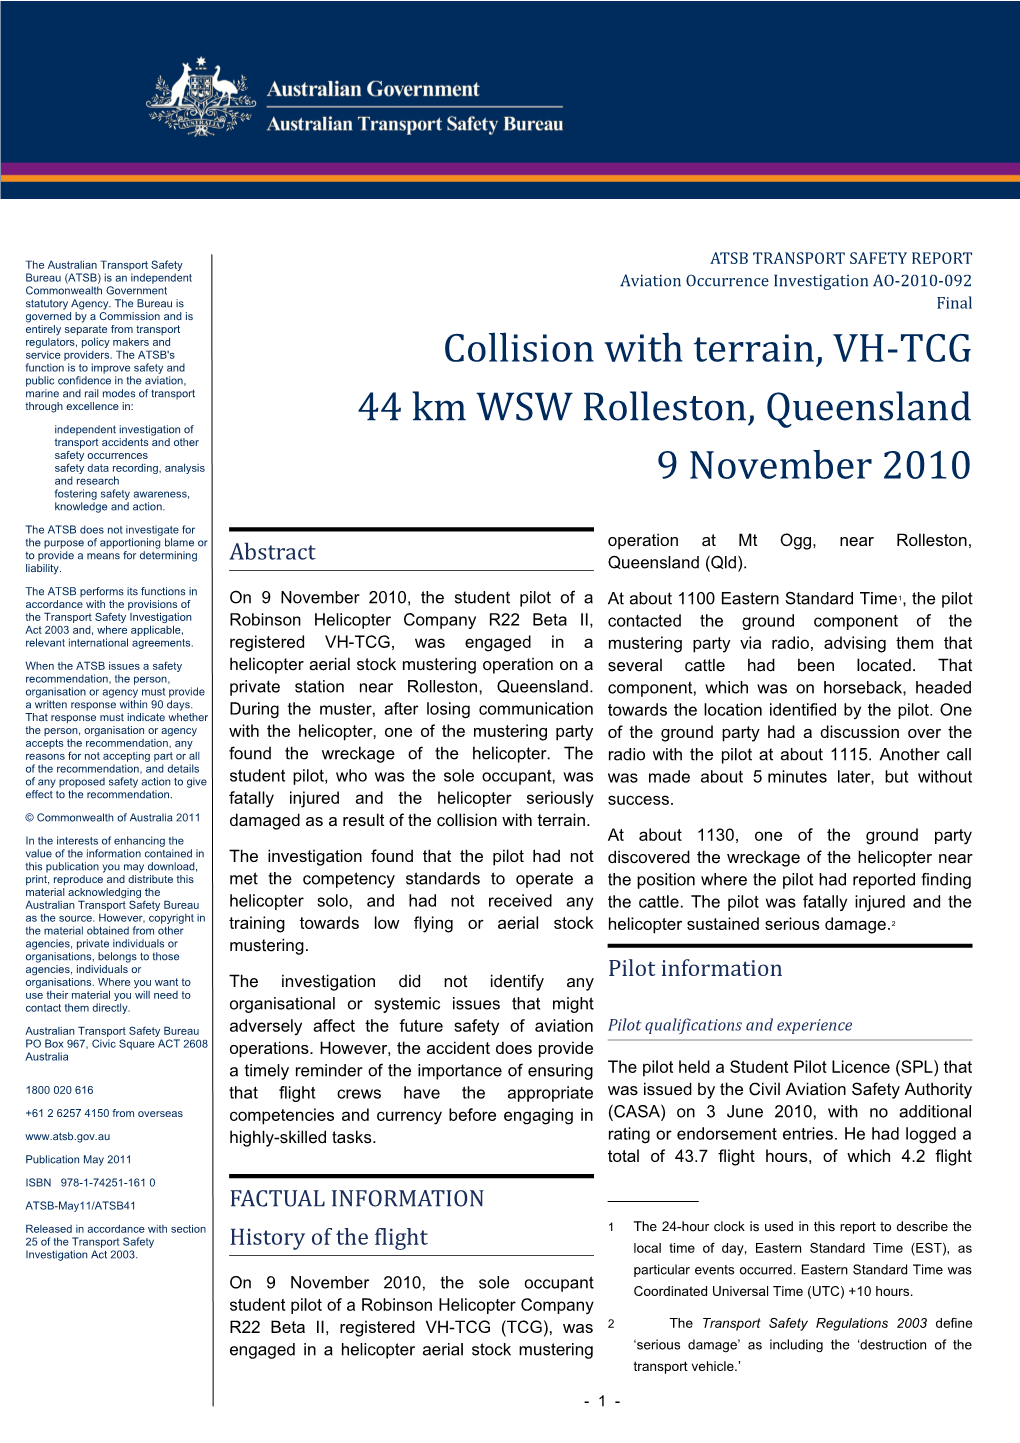 Collision with Terrain, VH-TCG 44 Km WSW Rolleston, Queensland 9 November 2010